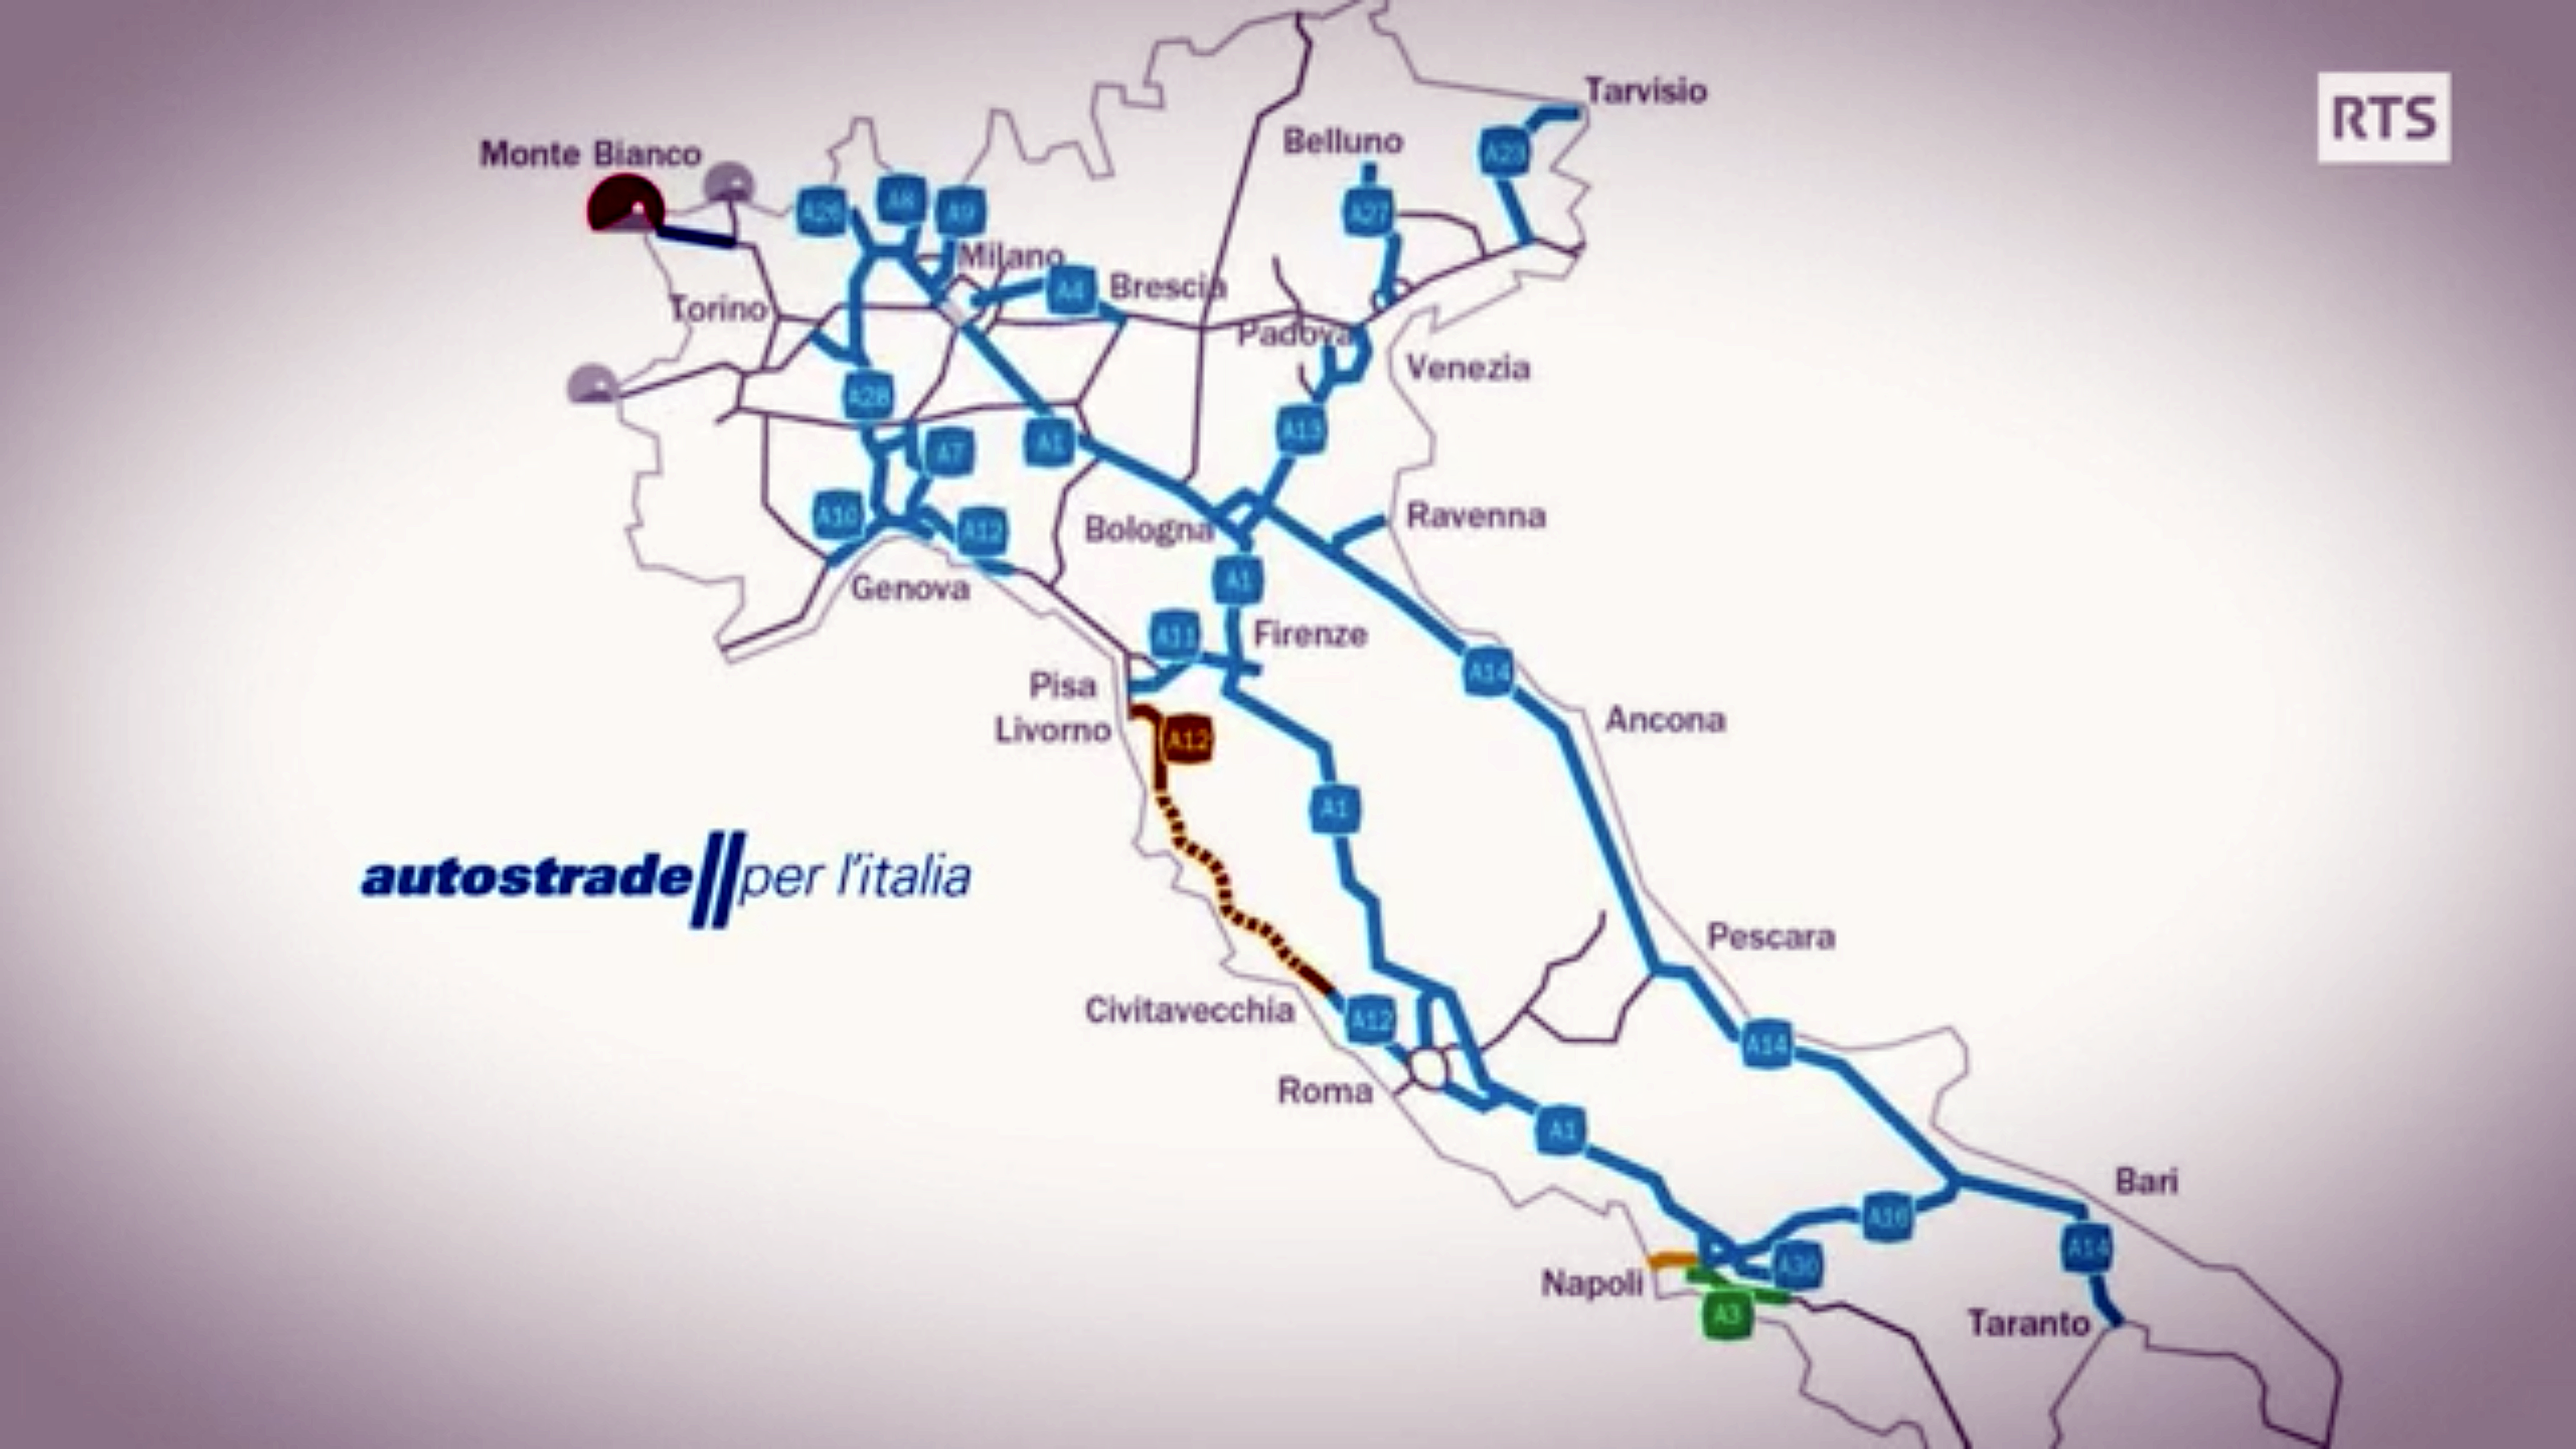 Autostrade per l'Italia gère 3000km d'autoroutes en Italie. [RSI]